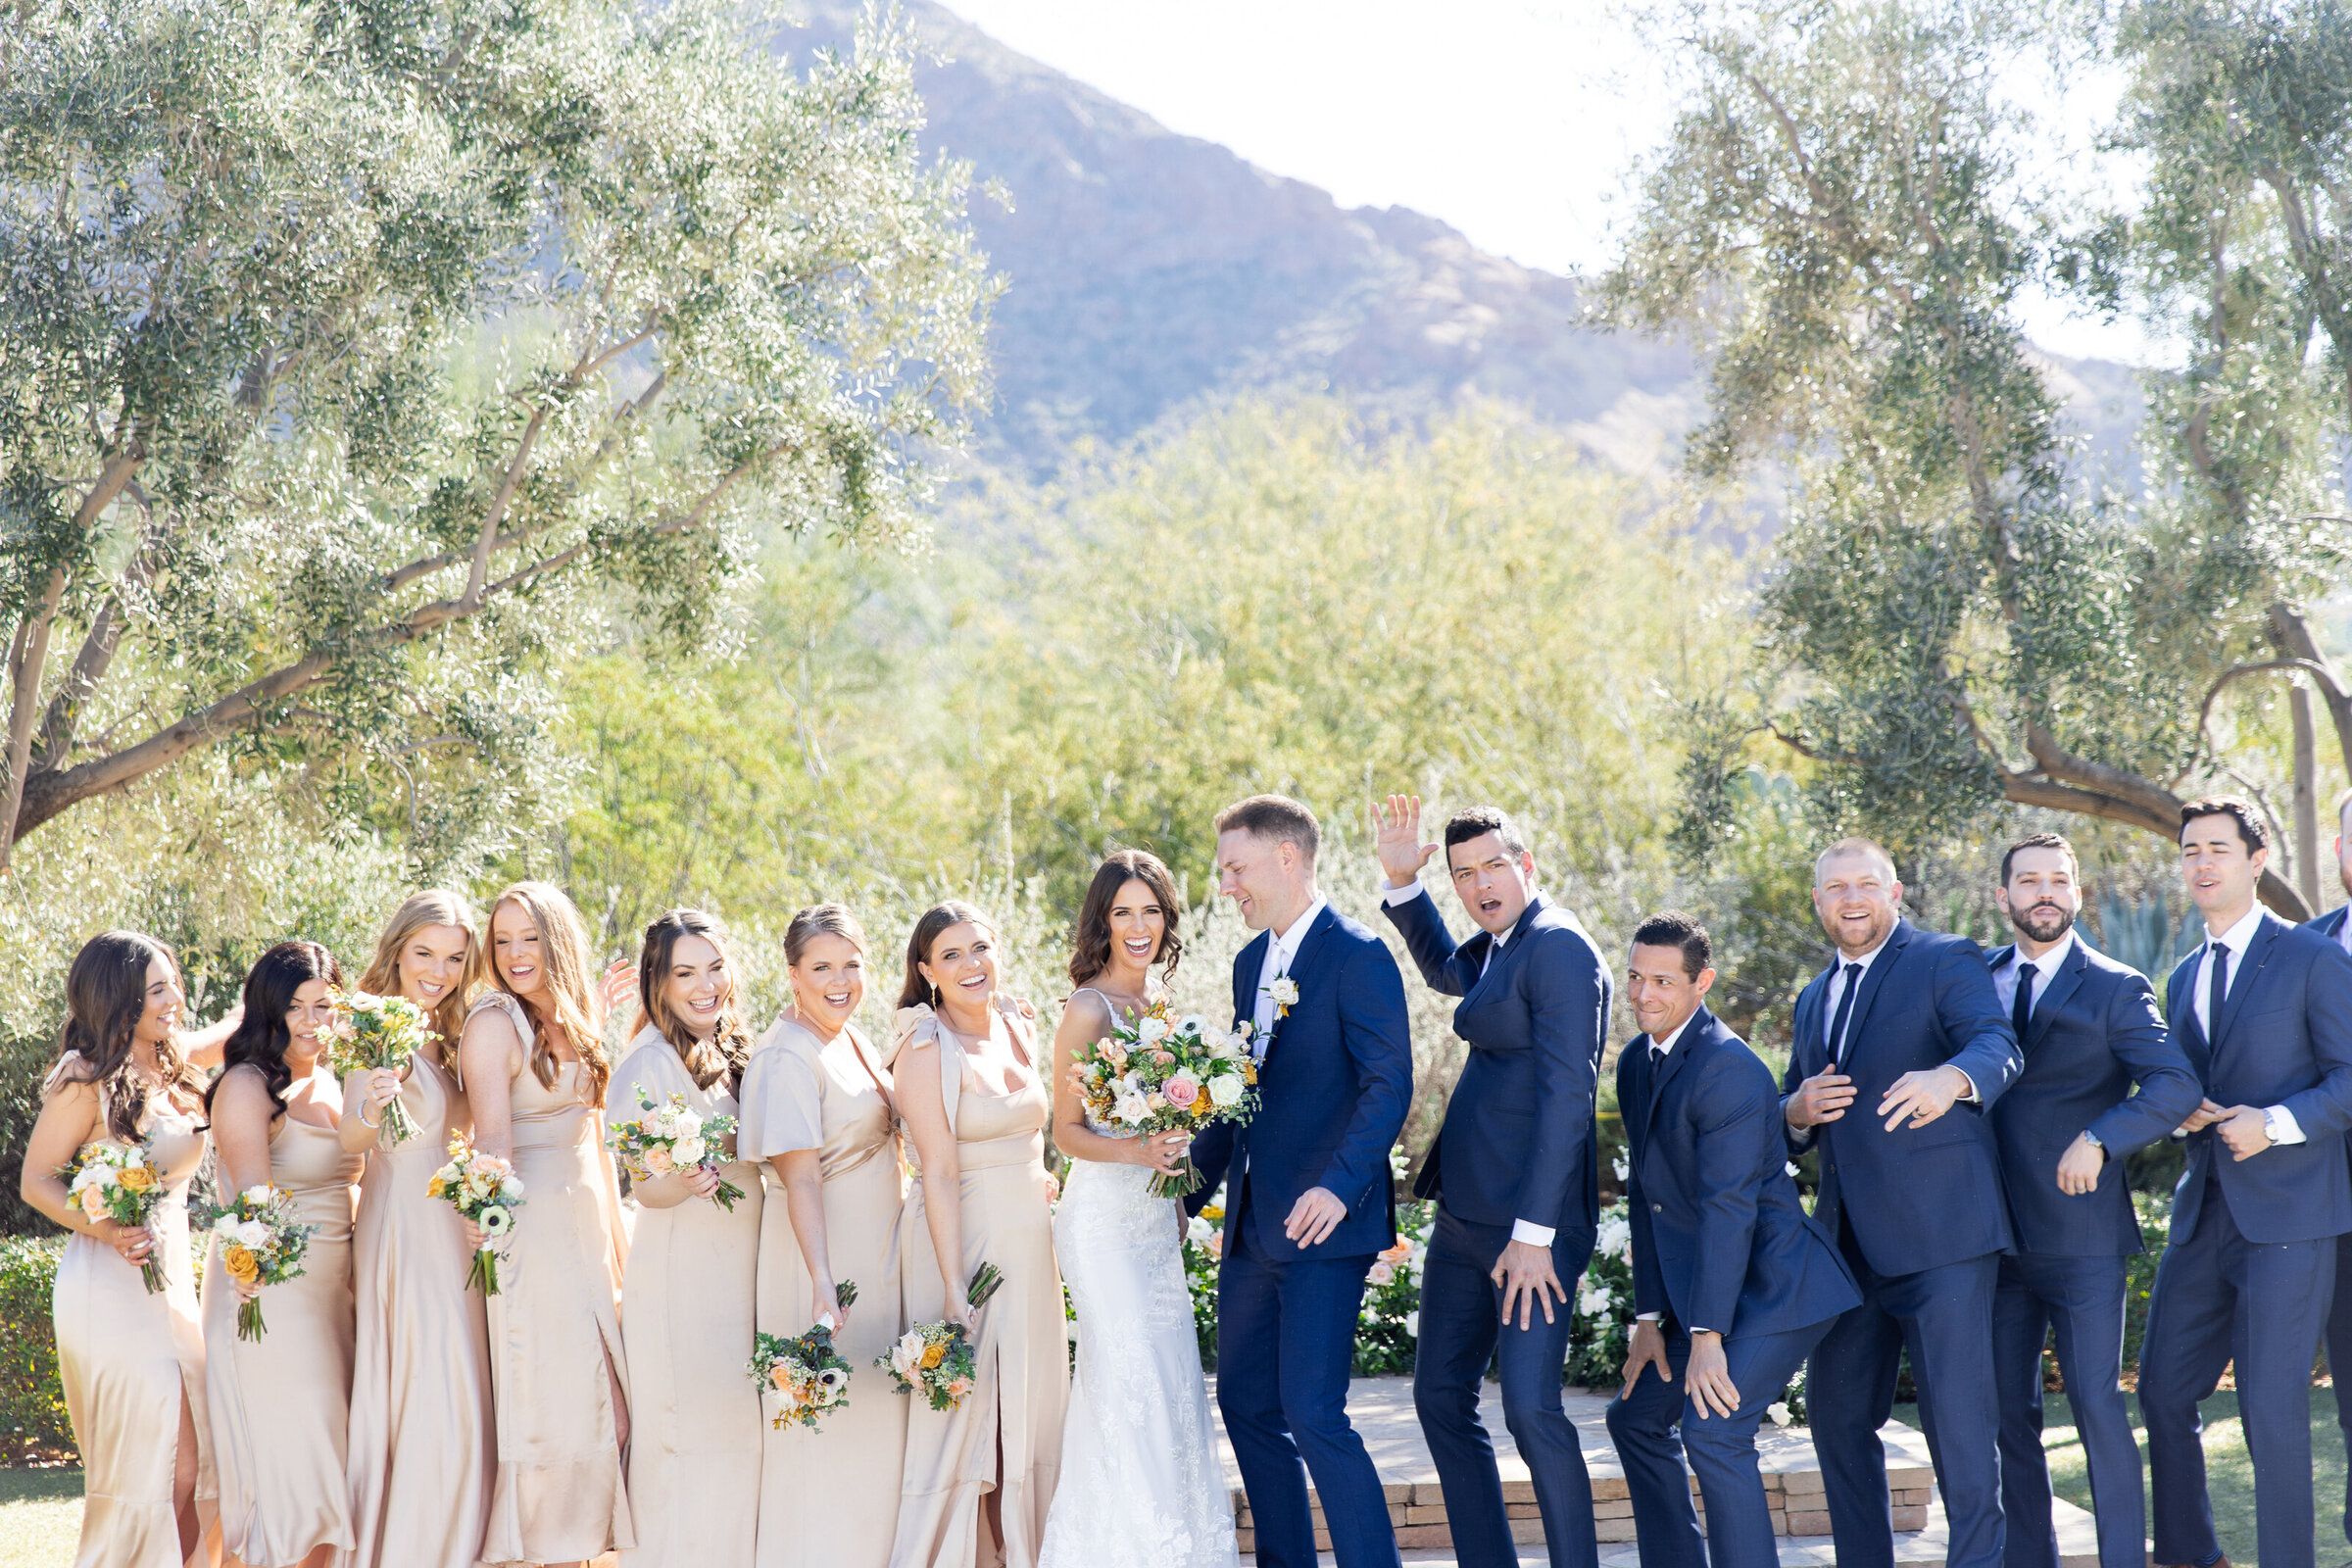 Karlie Colleen Photography - Kelcie & Ross - El Chorro Wedding - Arizona - Some like it classic -334